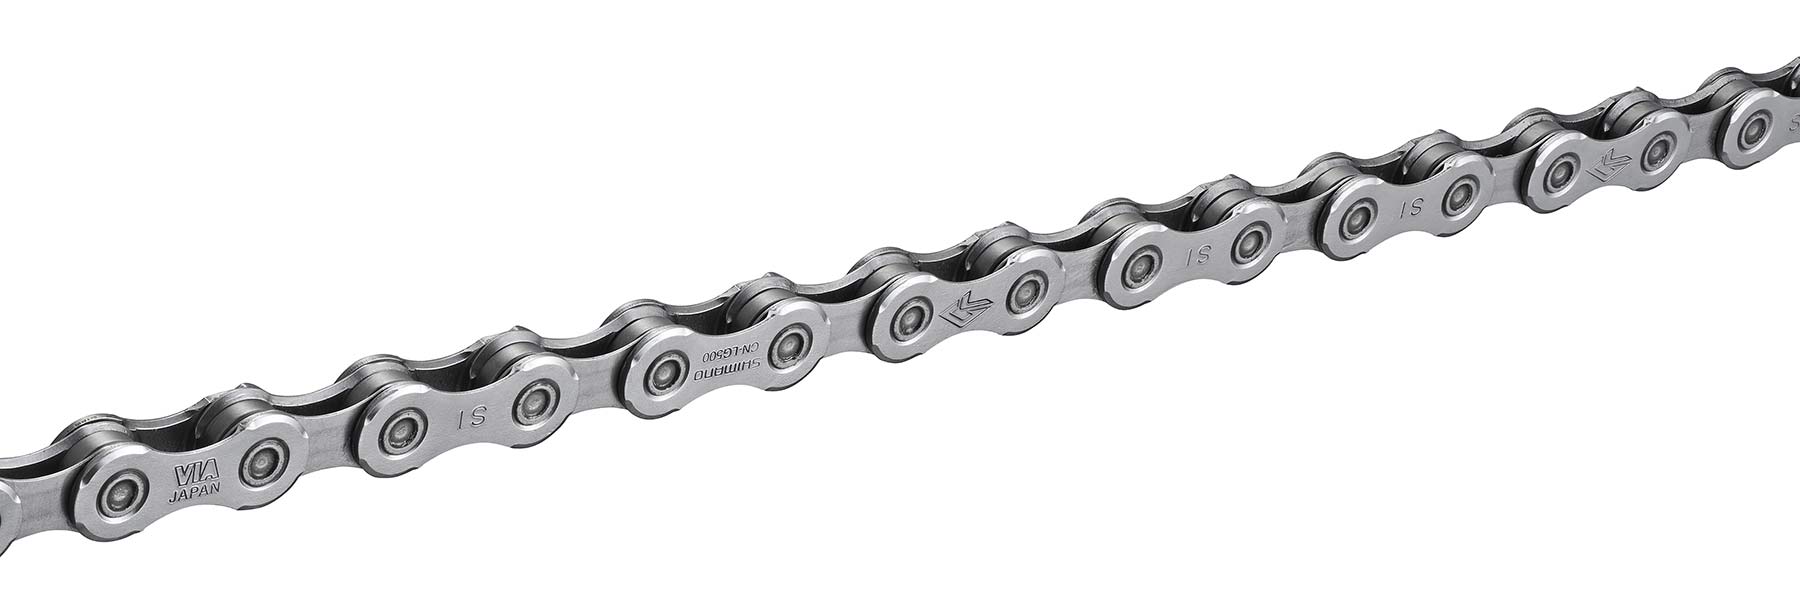 Shimano Deore XT LinkGlide drivetrain is 3x more durable, new LG MTB long-wearing mountain bike groupset, chain